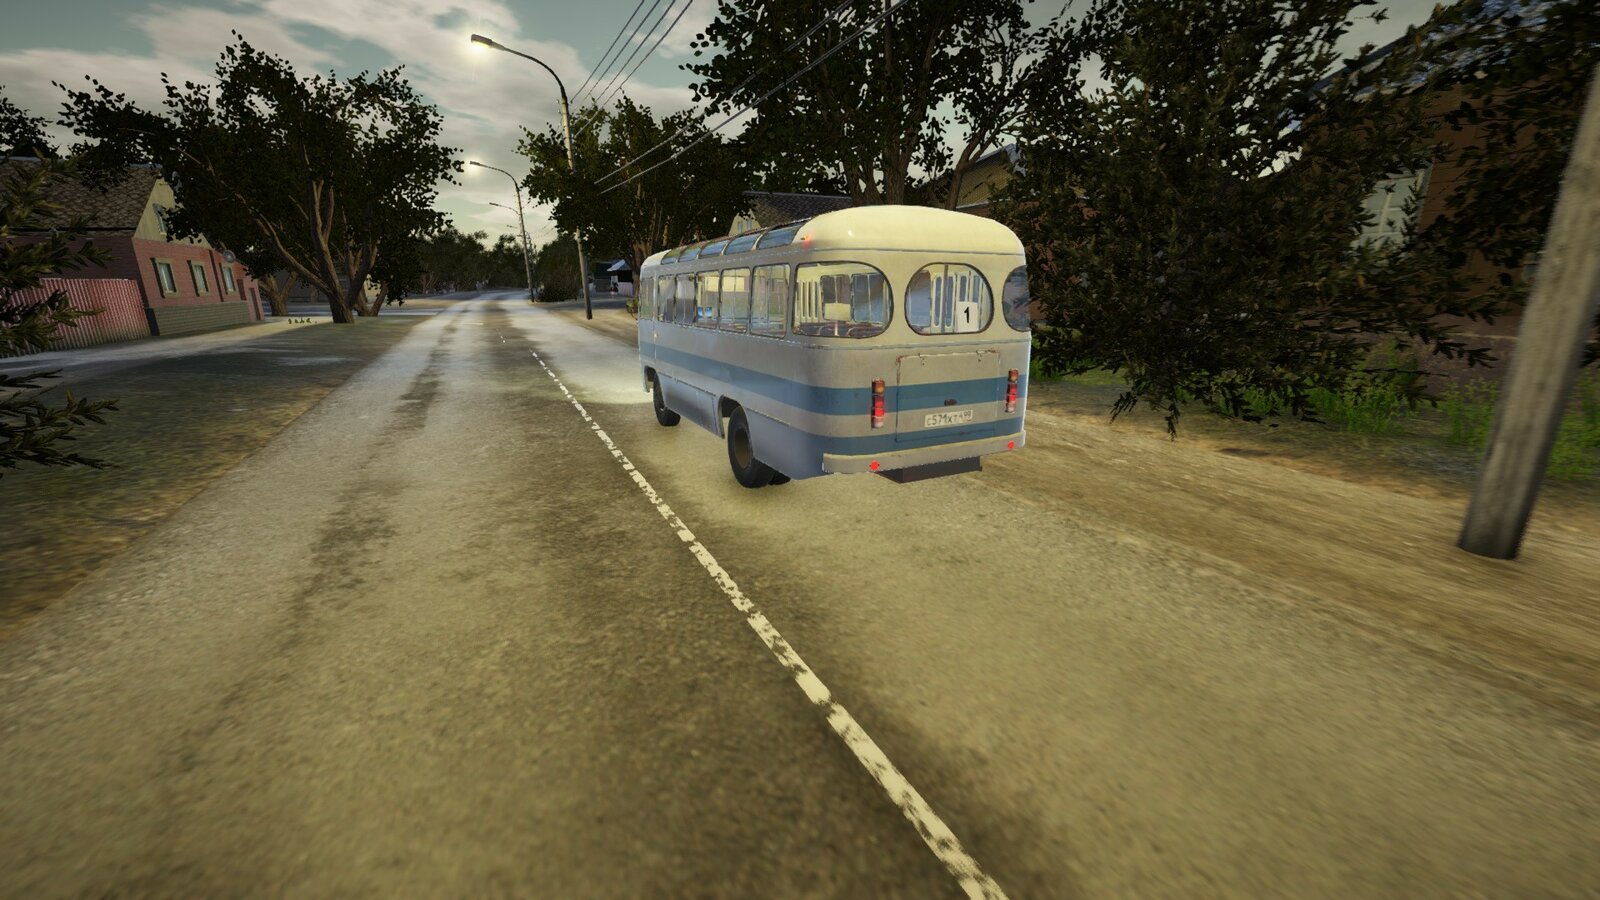 Bus Driver Simulator - Old Legend